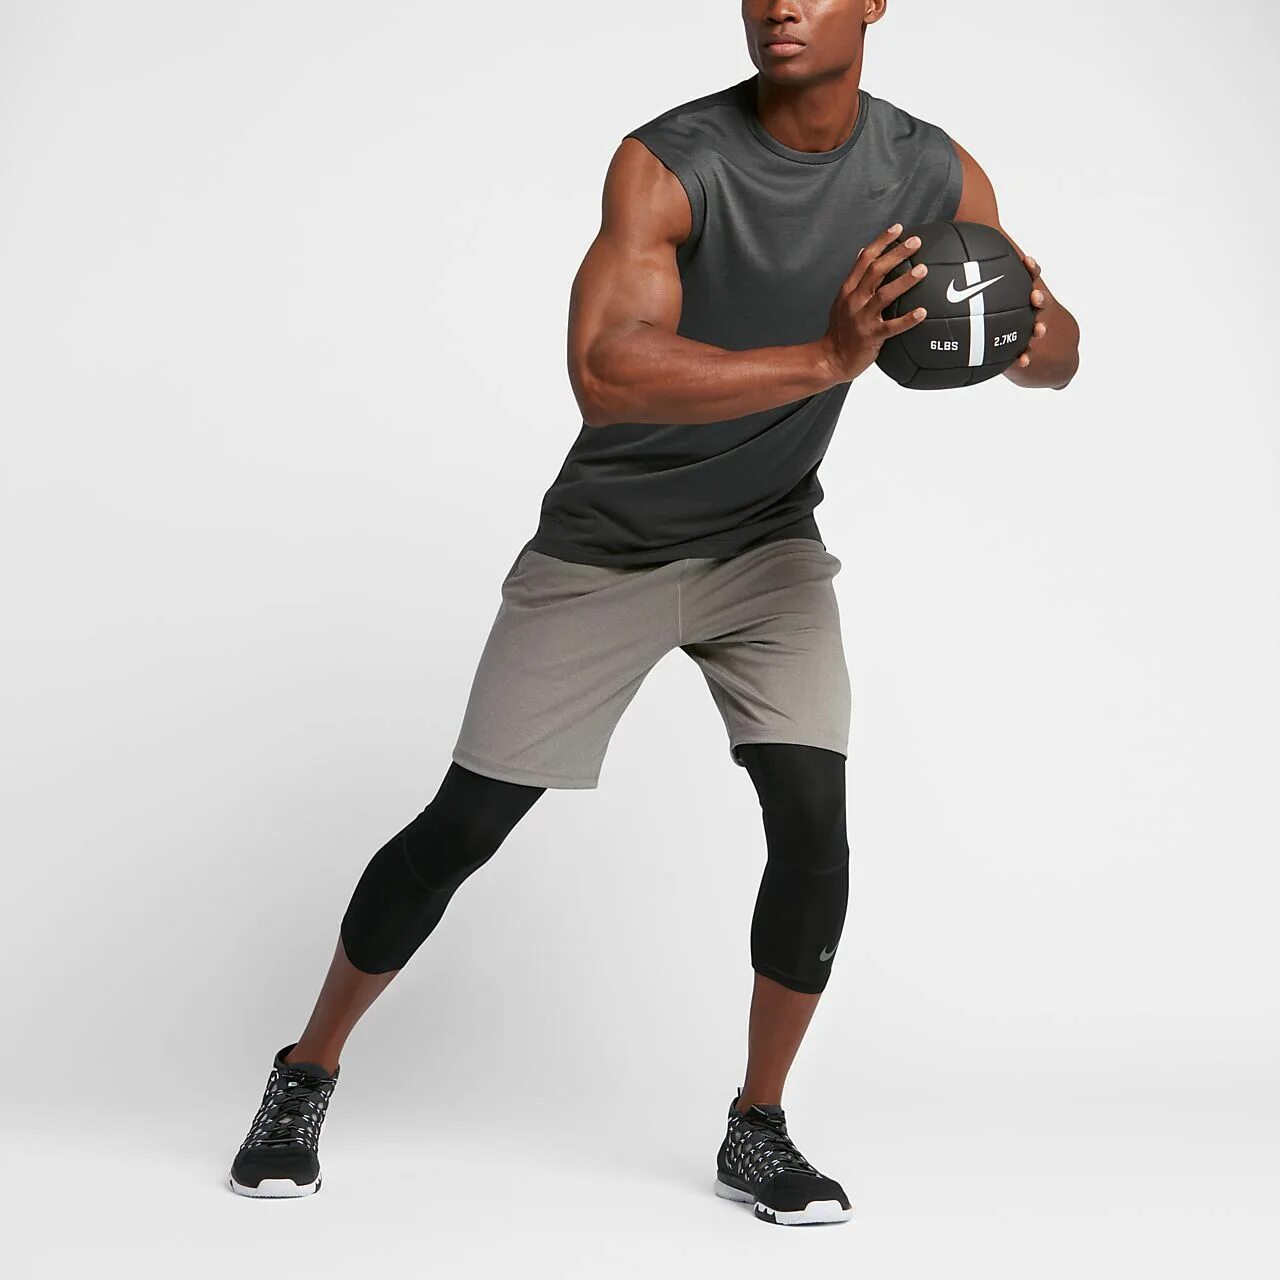 Nike Dri Fit шорты для бега. Nike Training Dri-Fit slub Wildcard. Nike Trainer outfit. Nike одежда для тренировки. Найк фитнес